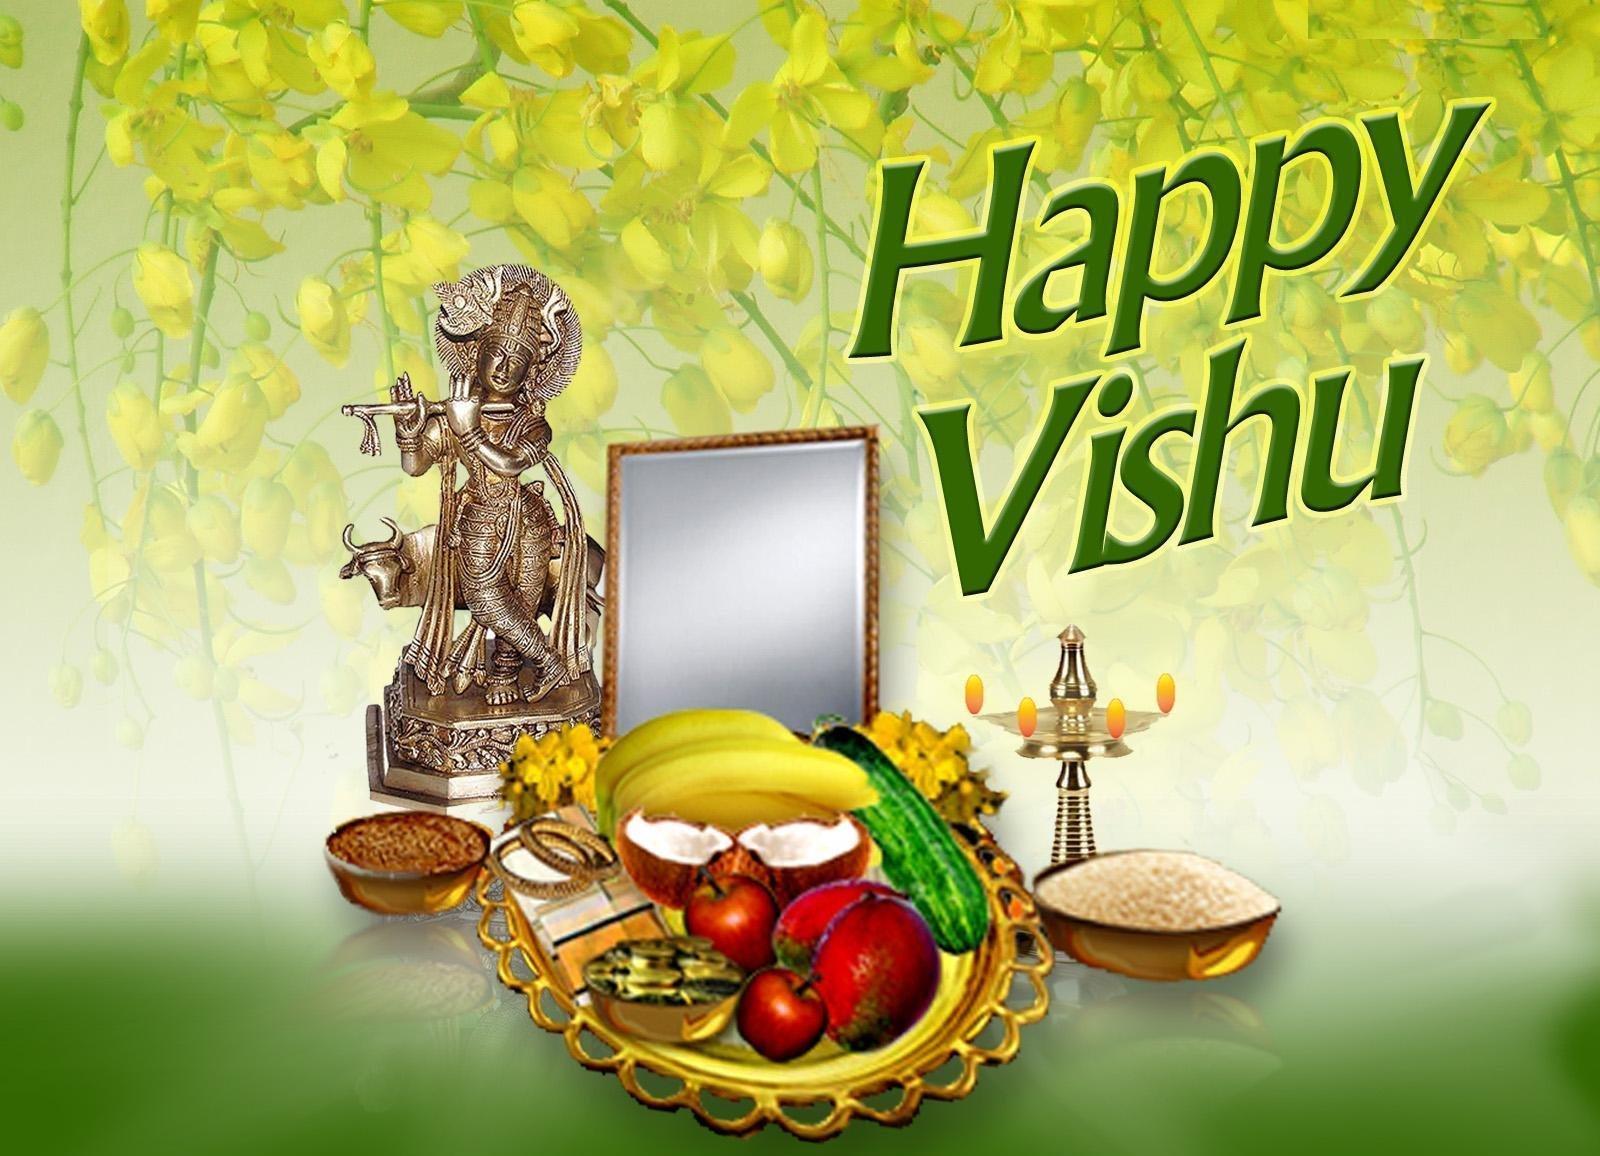 1000 Vishu Stock Photos Pictures  RoyaltyFree Images  iStock  Vishu  festival Happy vishu